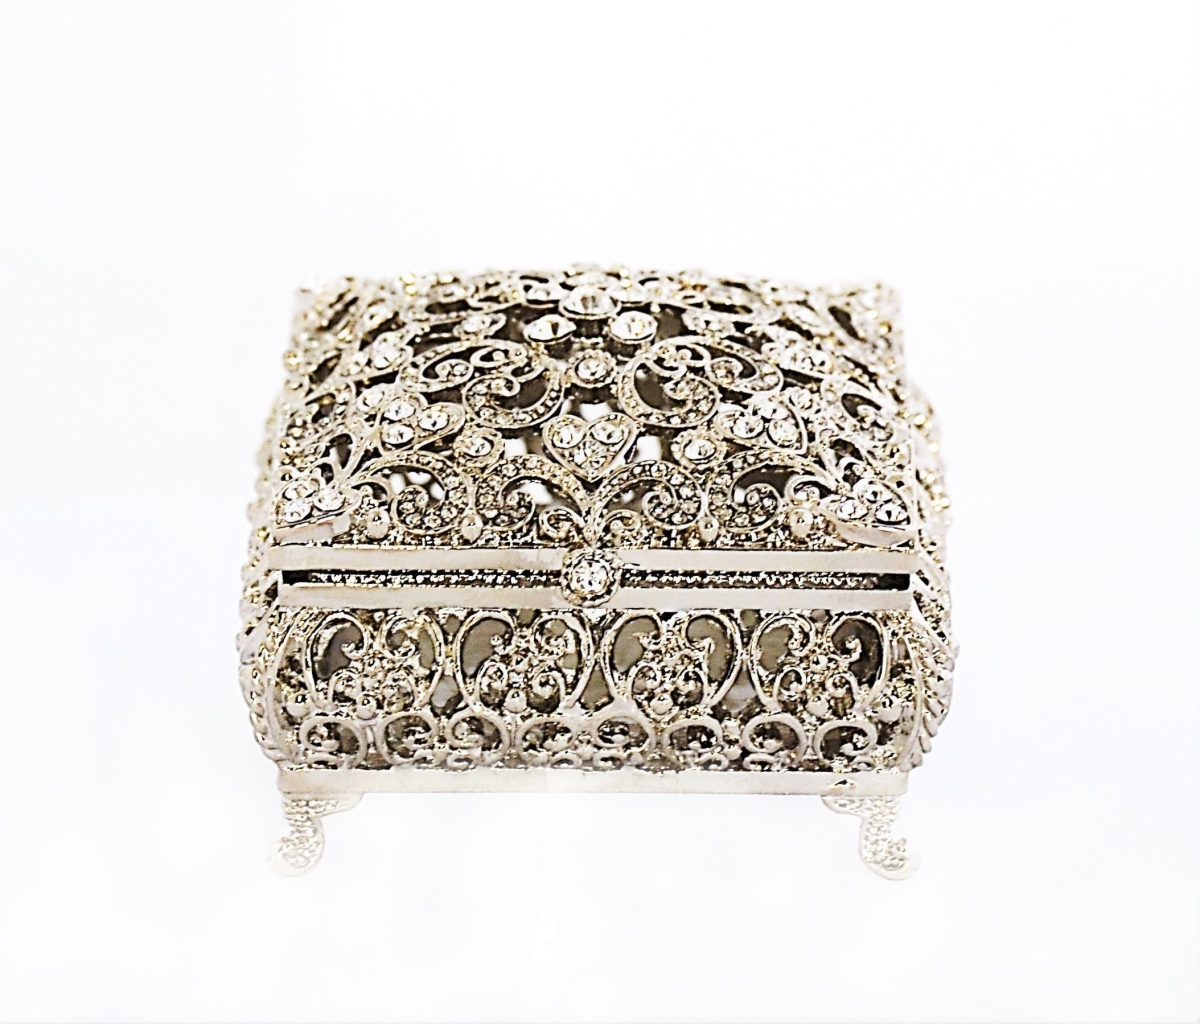 1012015a Artdeco Design Jewelry Silver Plating Trinket Box - Swarovski Crystals & Enamel